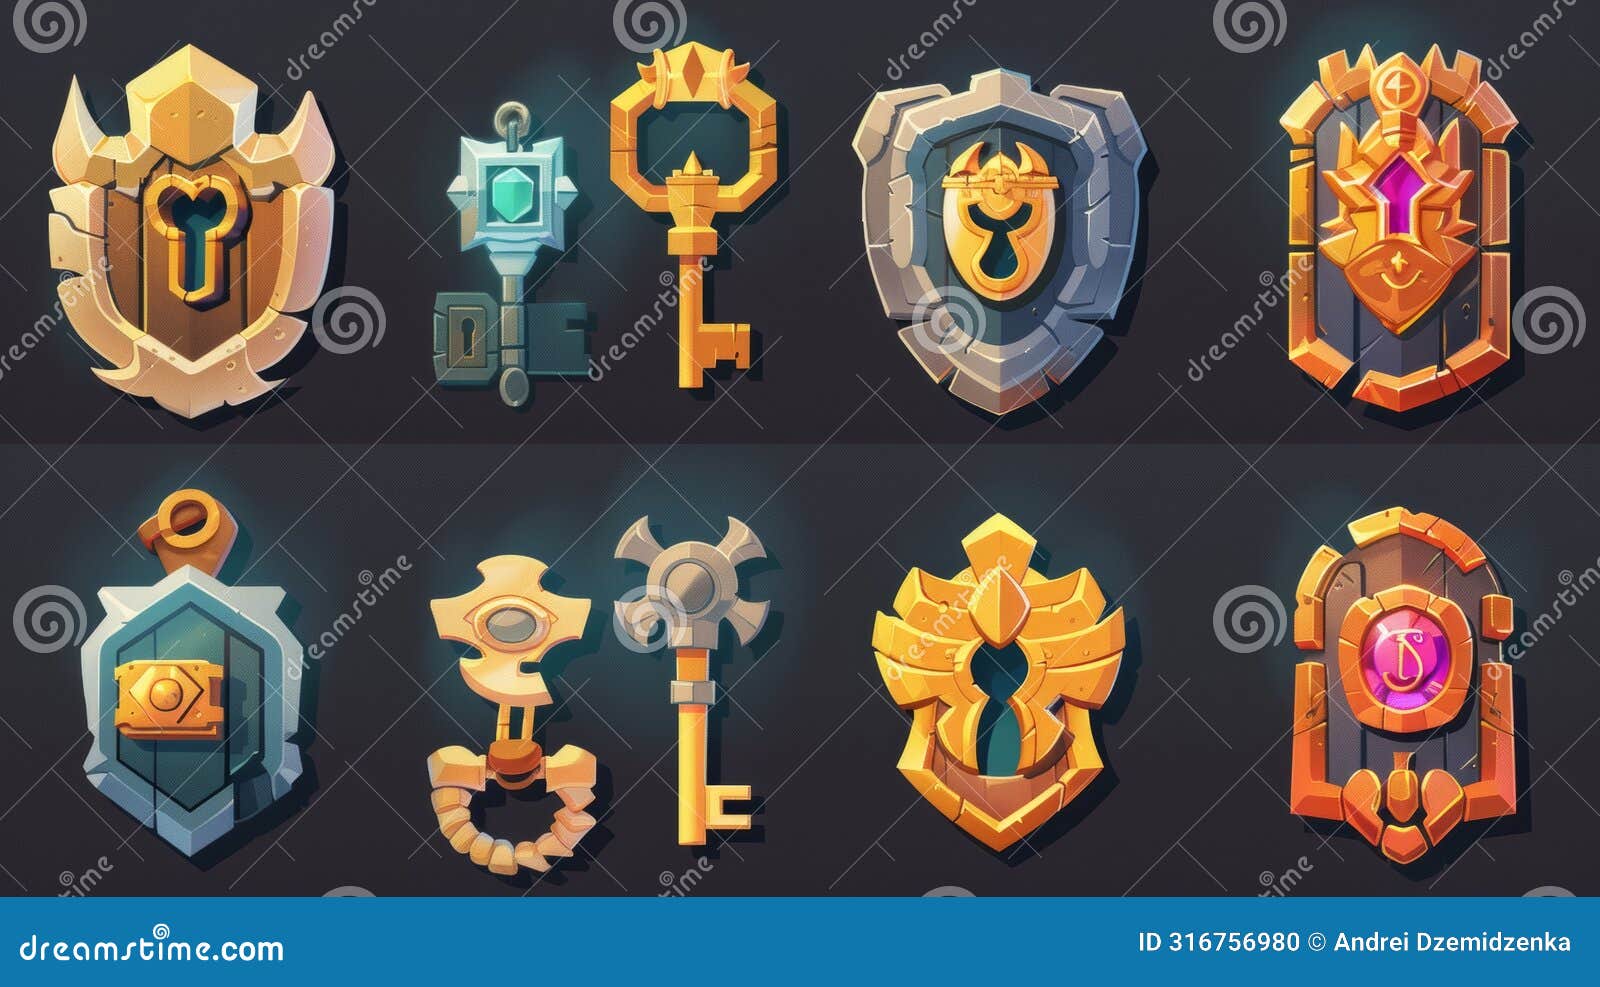 game reward keys, lock evolution, loot, rare copper, iron, silver, golden, and platinum ui gamer assets, modern